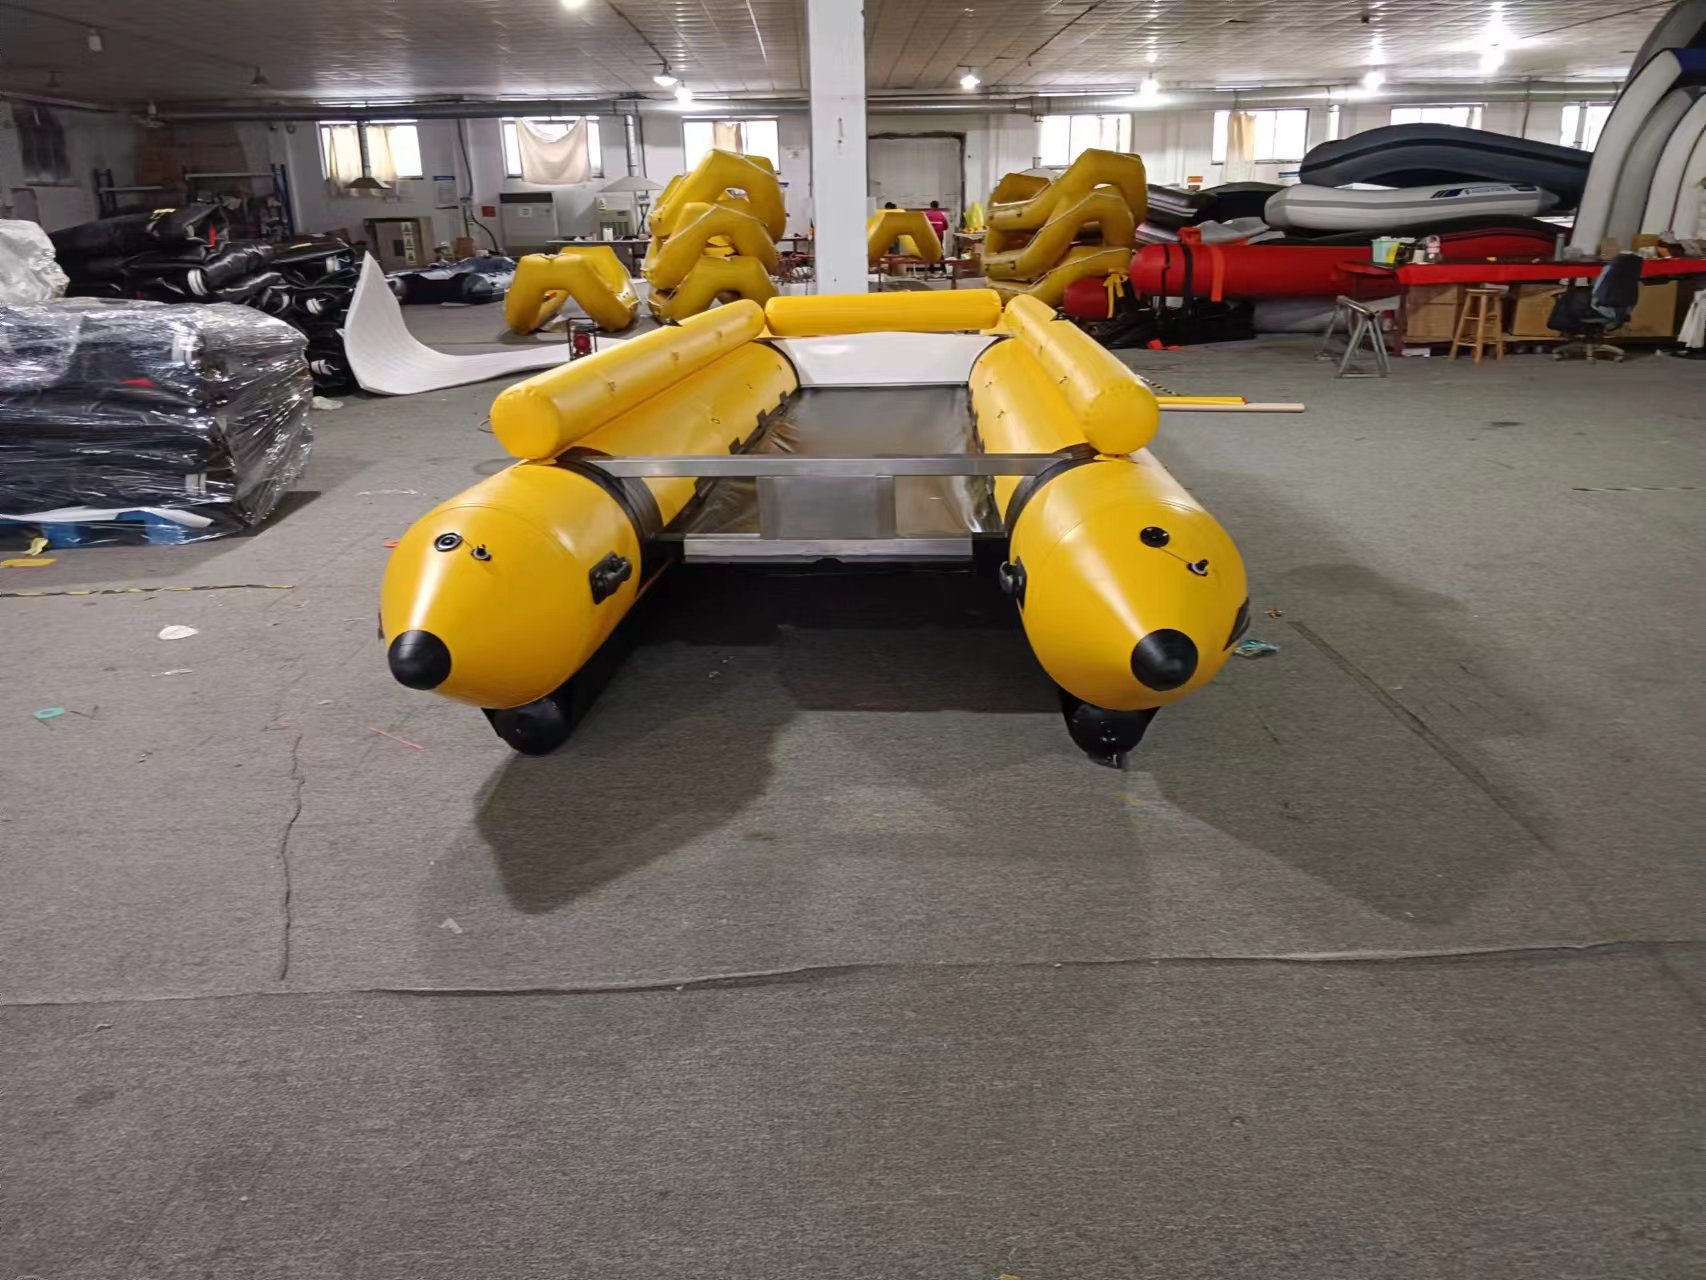  Bote inflable de velocidad de catamarán con piso de aluminio 